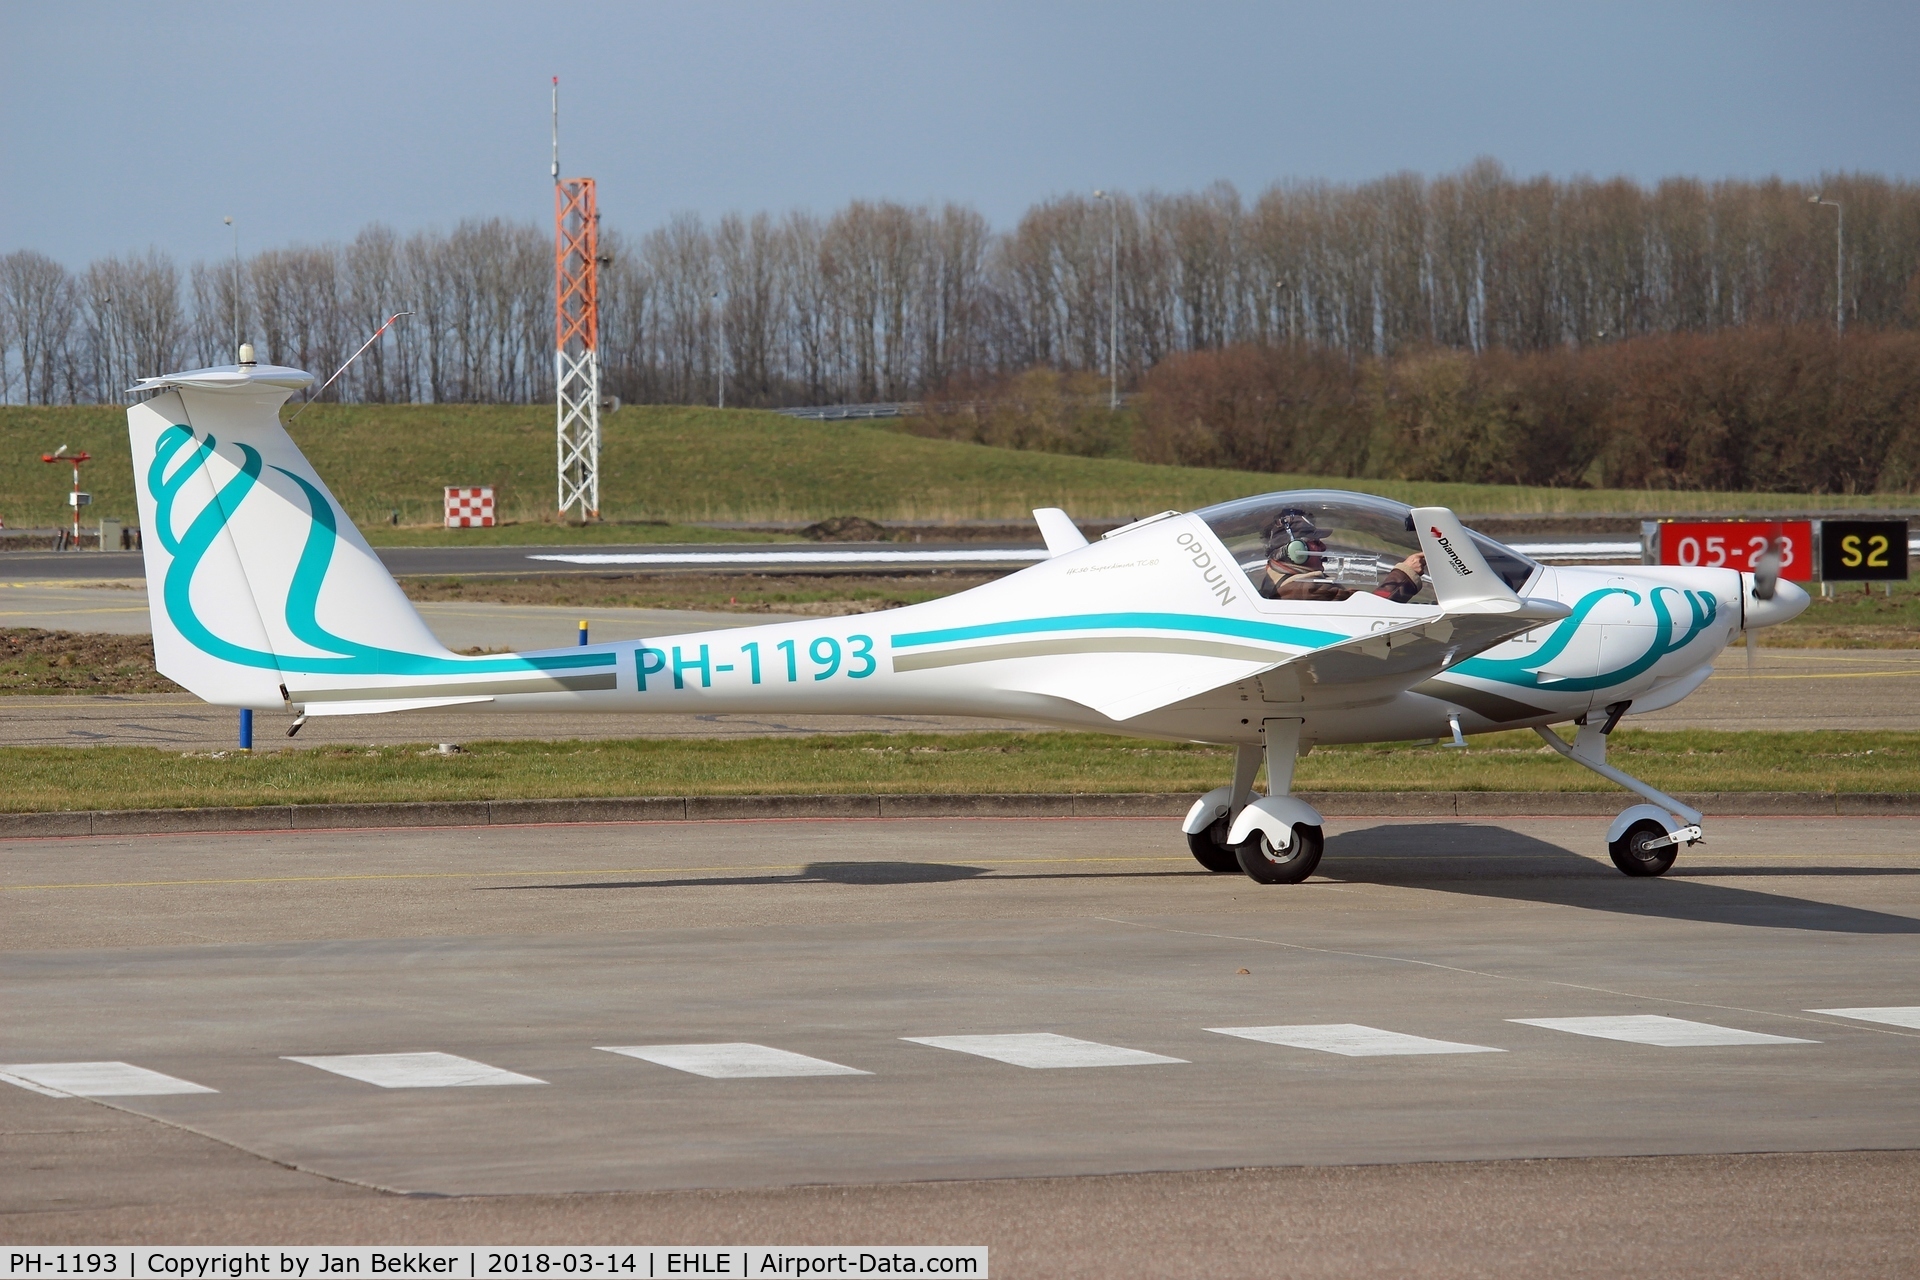 PH-1193, 2000 Diamond HK-36TC Super Dimona C/N 36669, Lelystad Airport